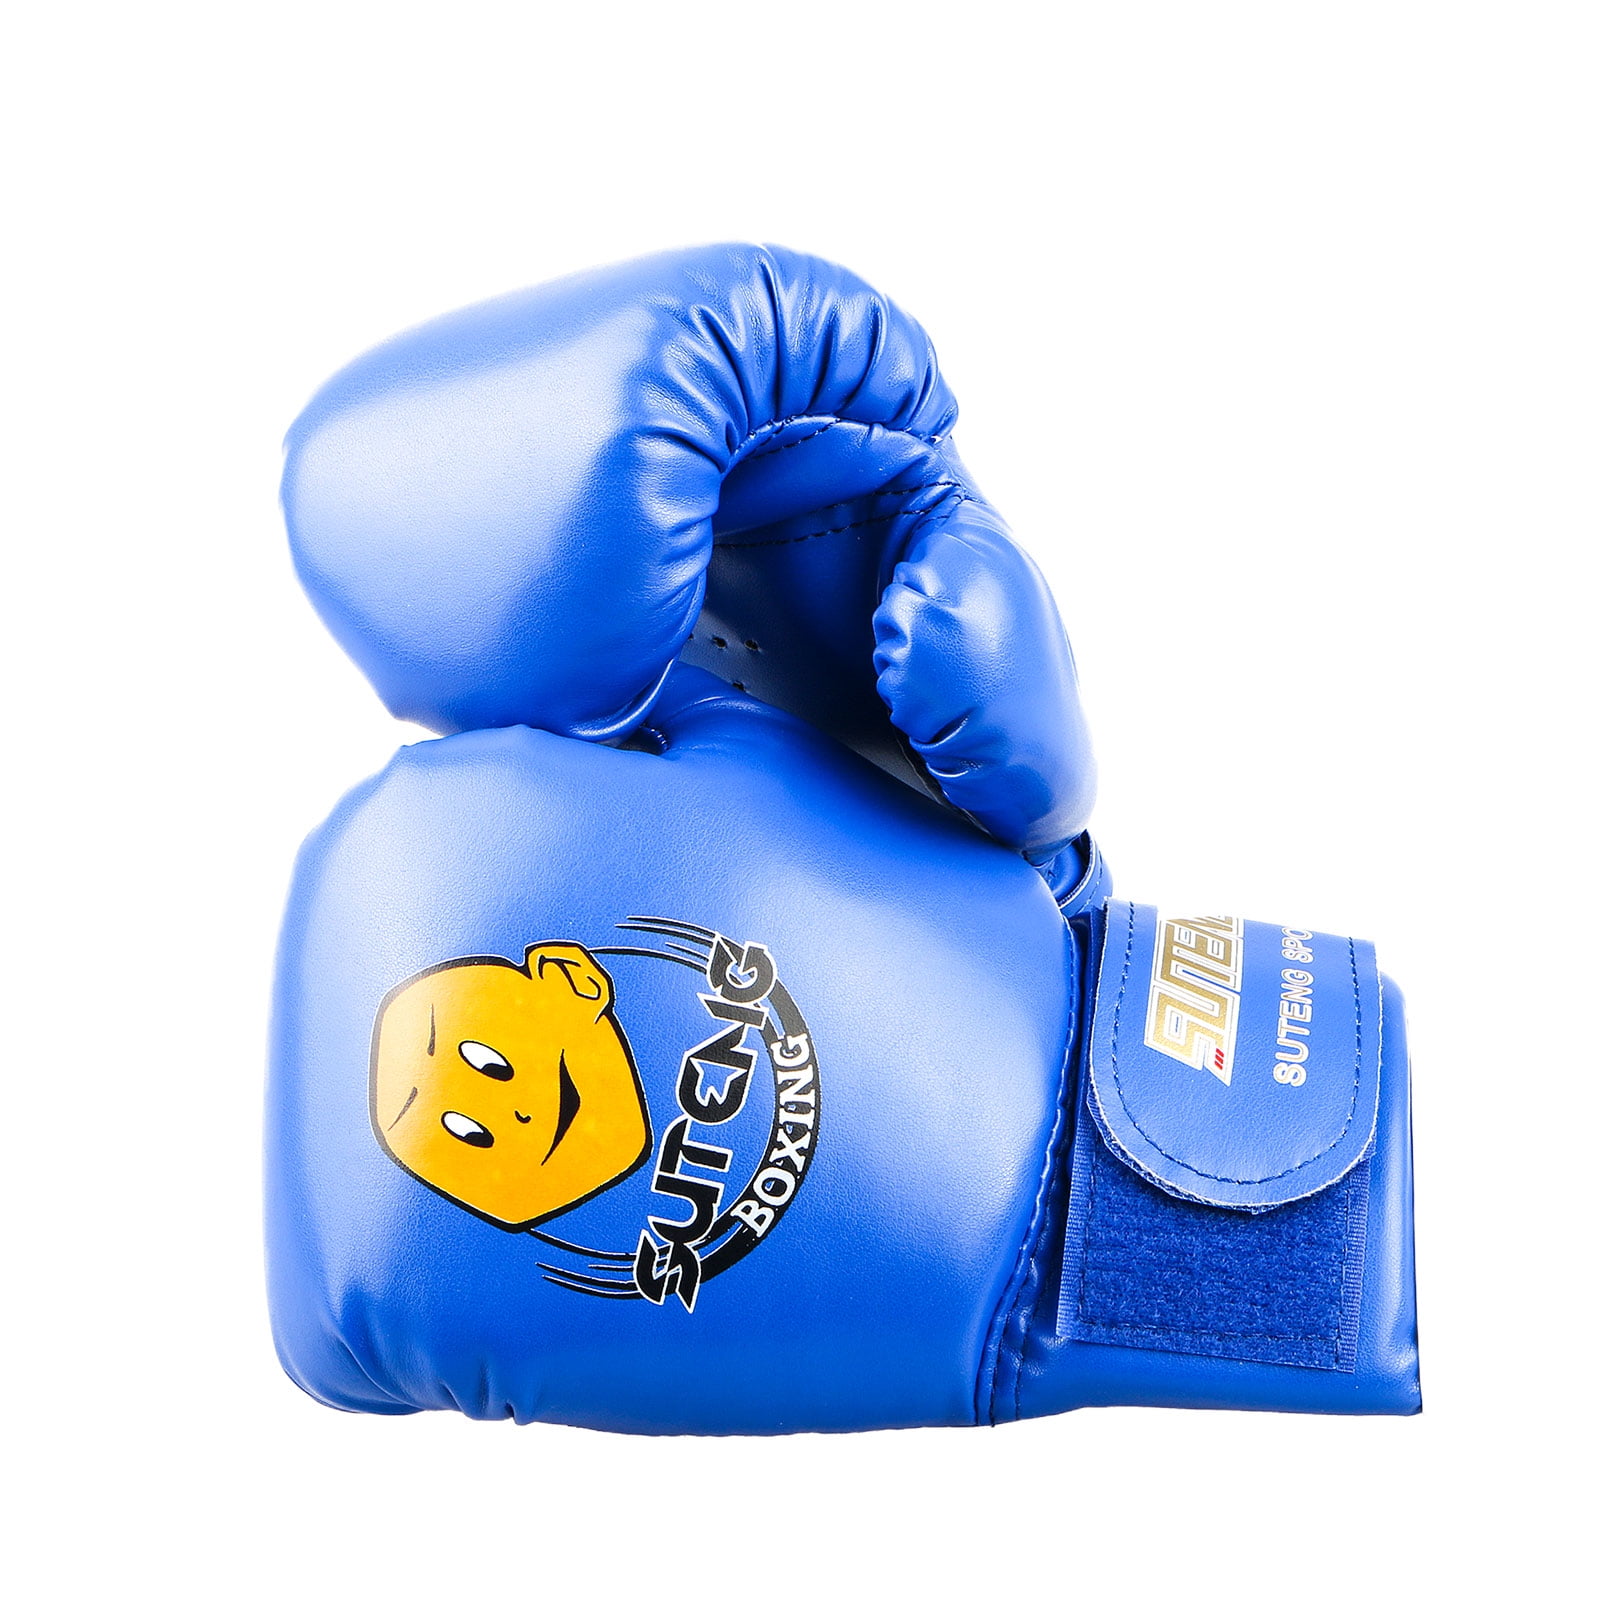 Cheerwing 4oz PU Kids Boxing Gloves Children Cartoon MMA Sparring Dajn Training for sale online 